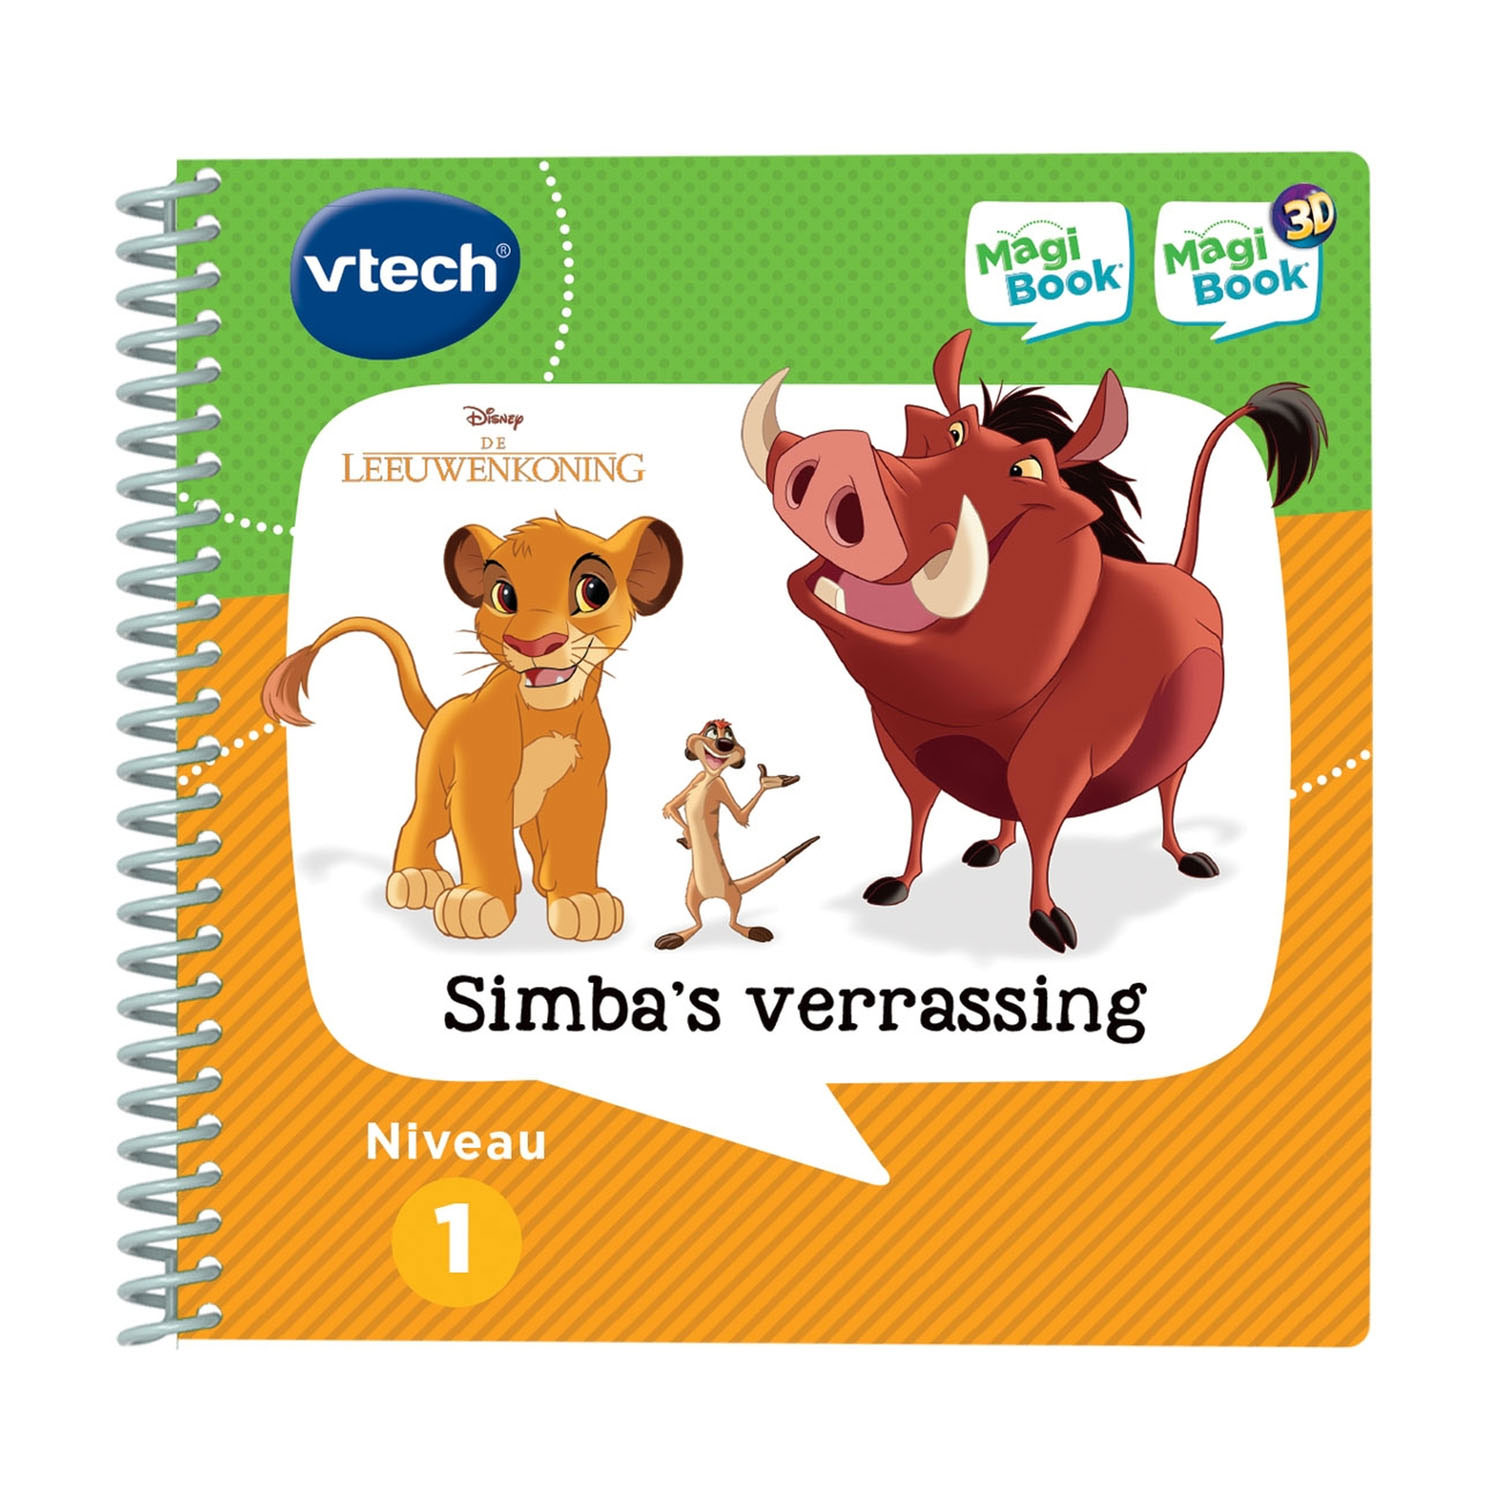  VTech MagiBook Platform Book Animals and Their